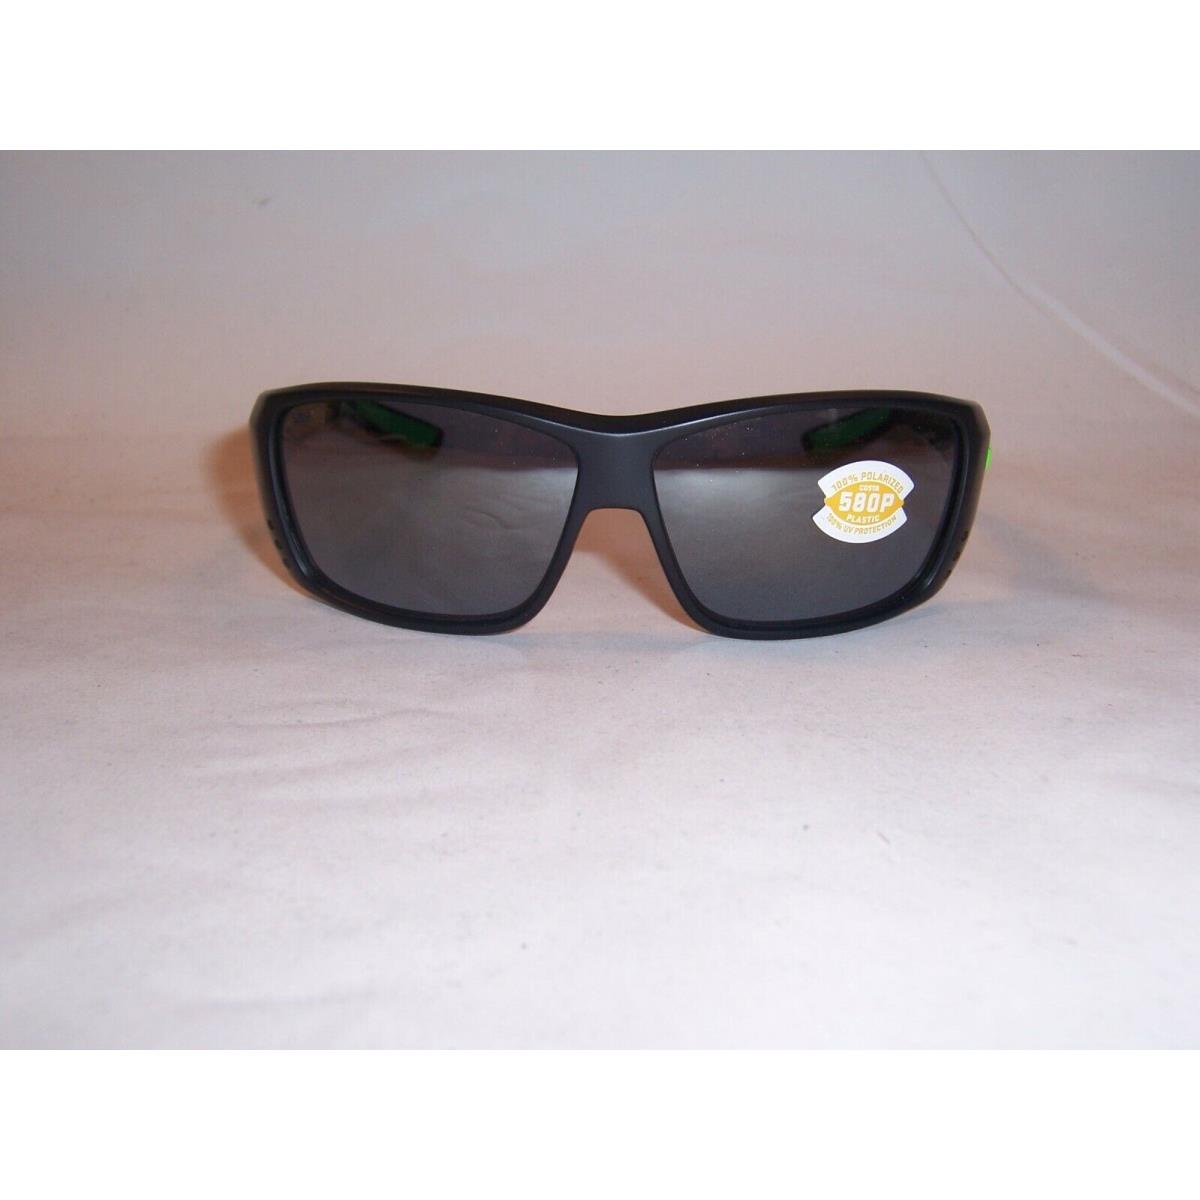 Costa Del Mar sunglasses  - Black Frame, Gray Silver Lens 2